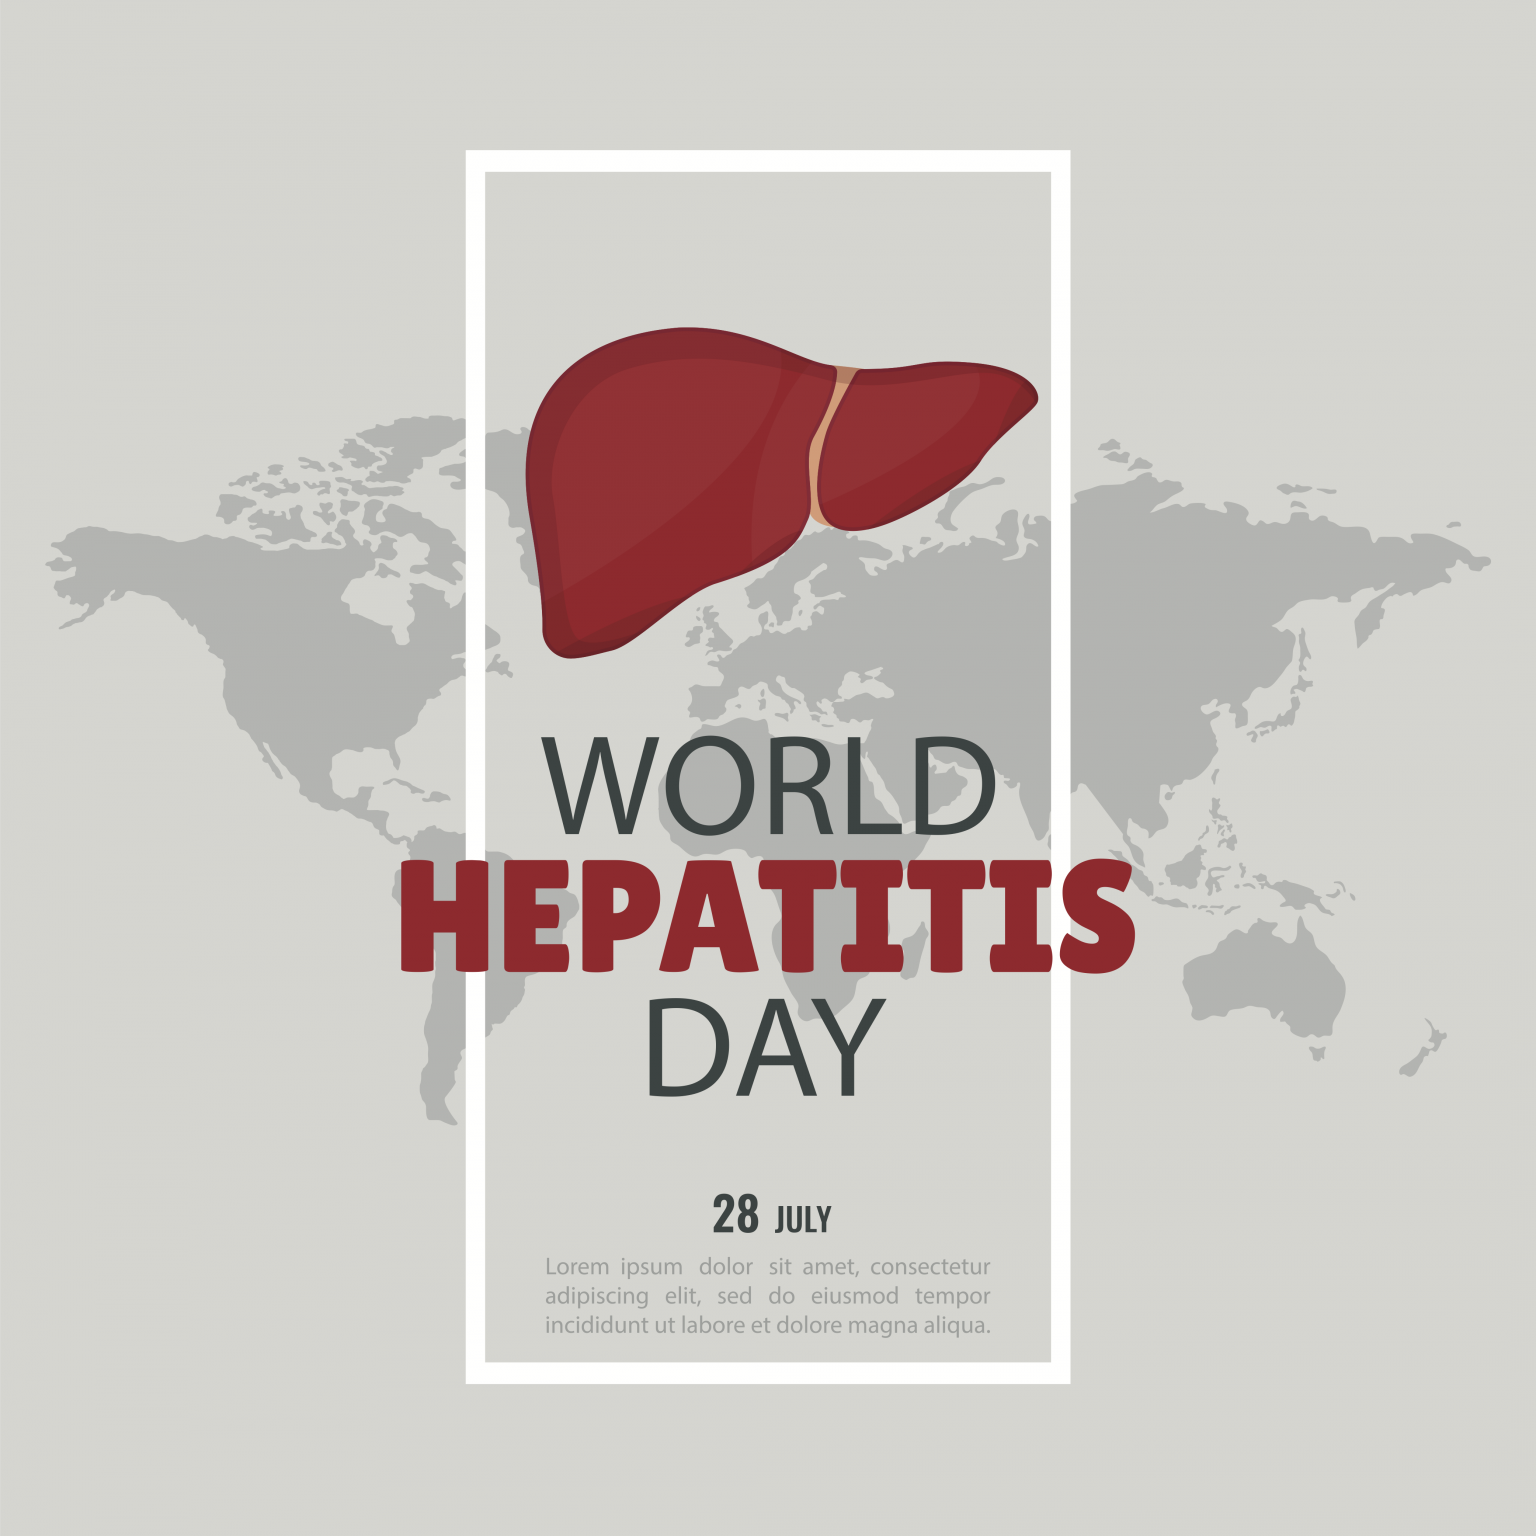 World Hepatitis Day / July 28